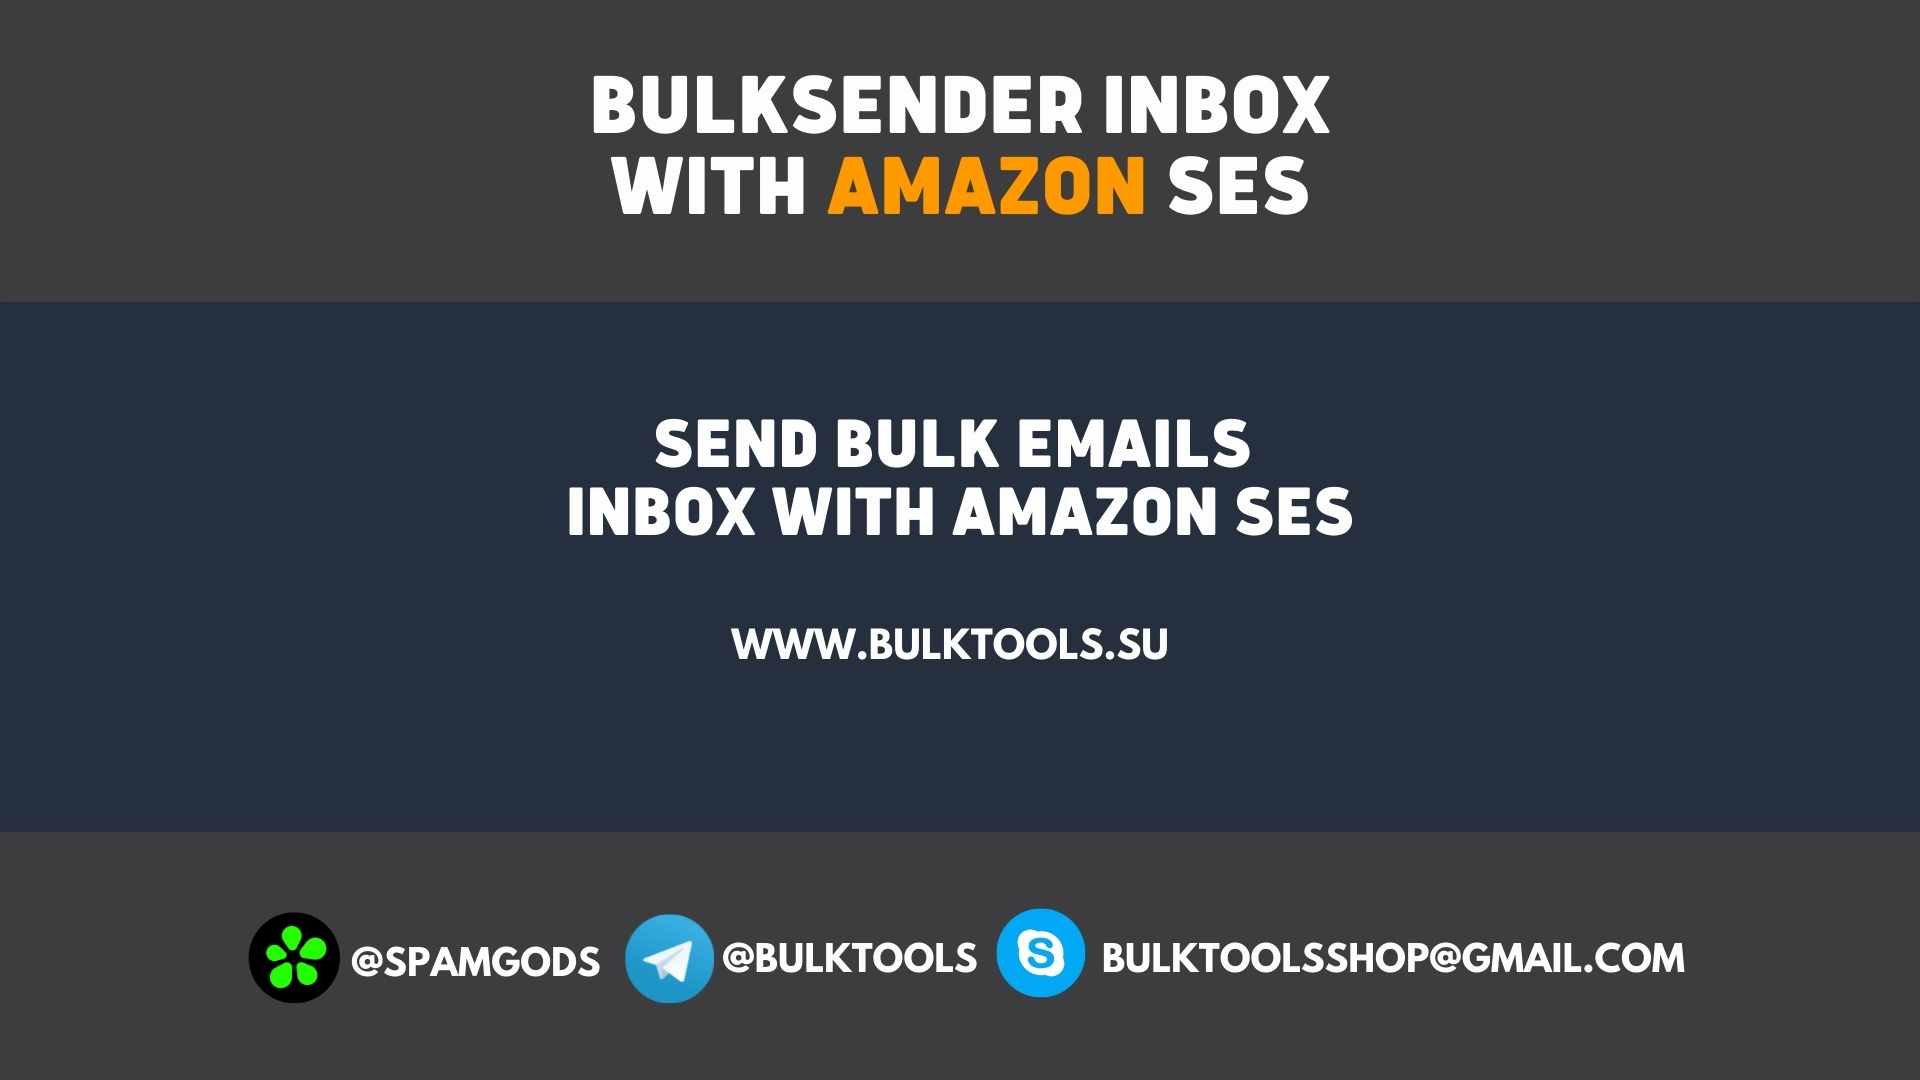 BulkSender Inbox With Amazon SES